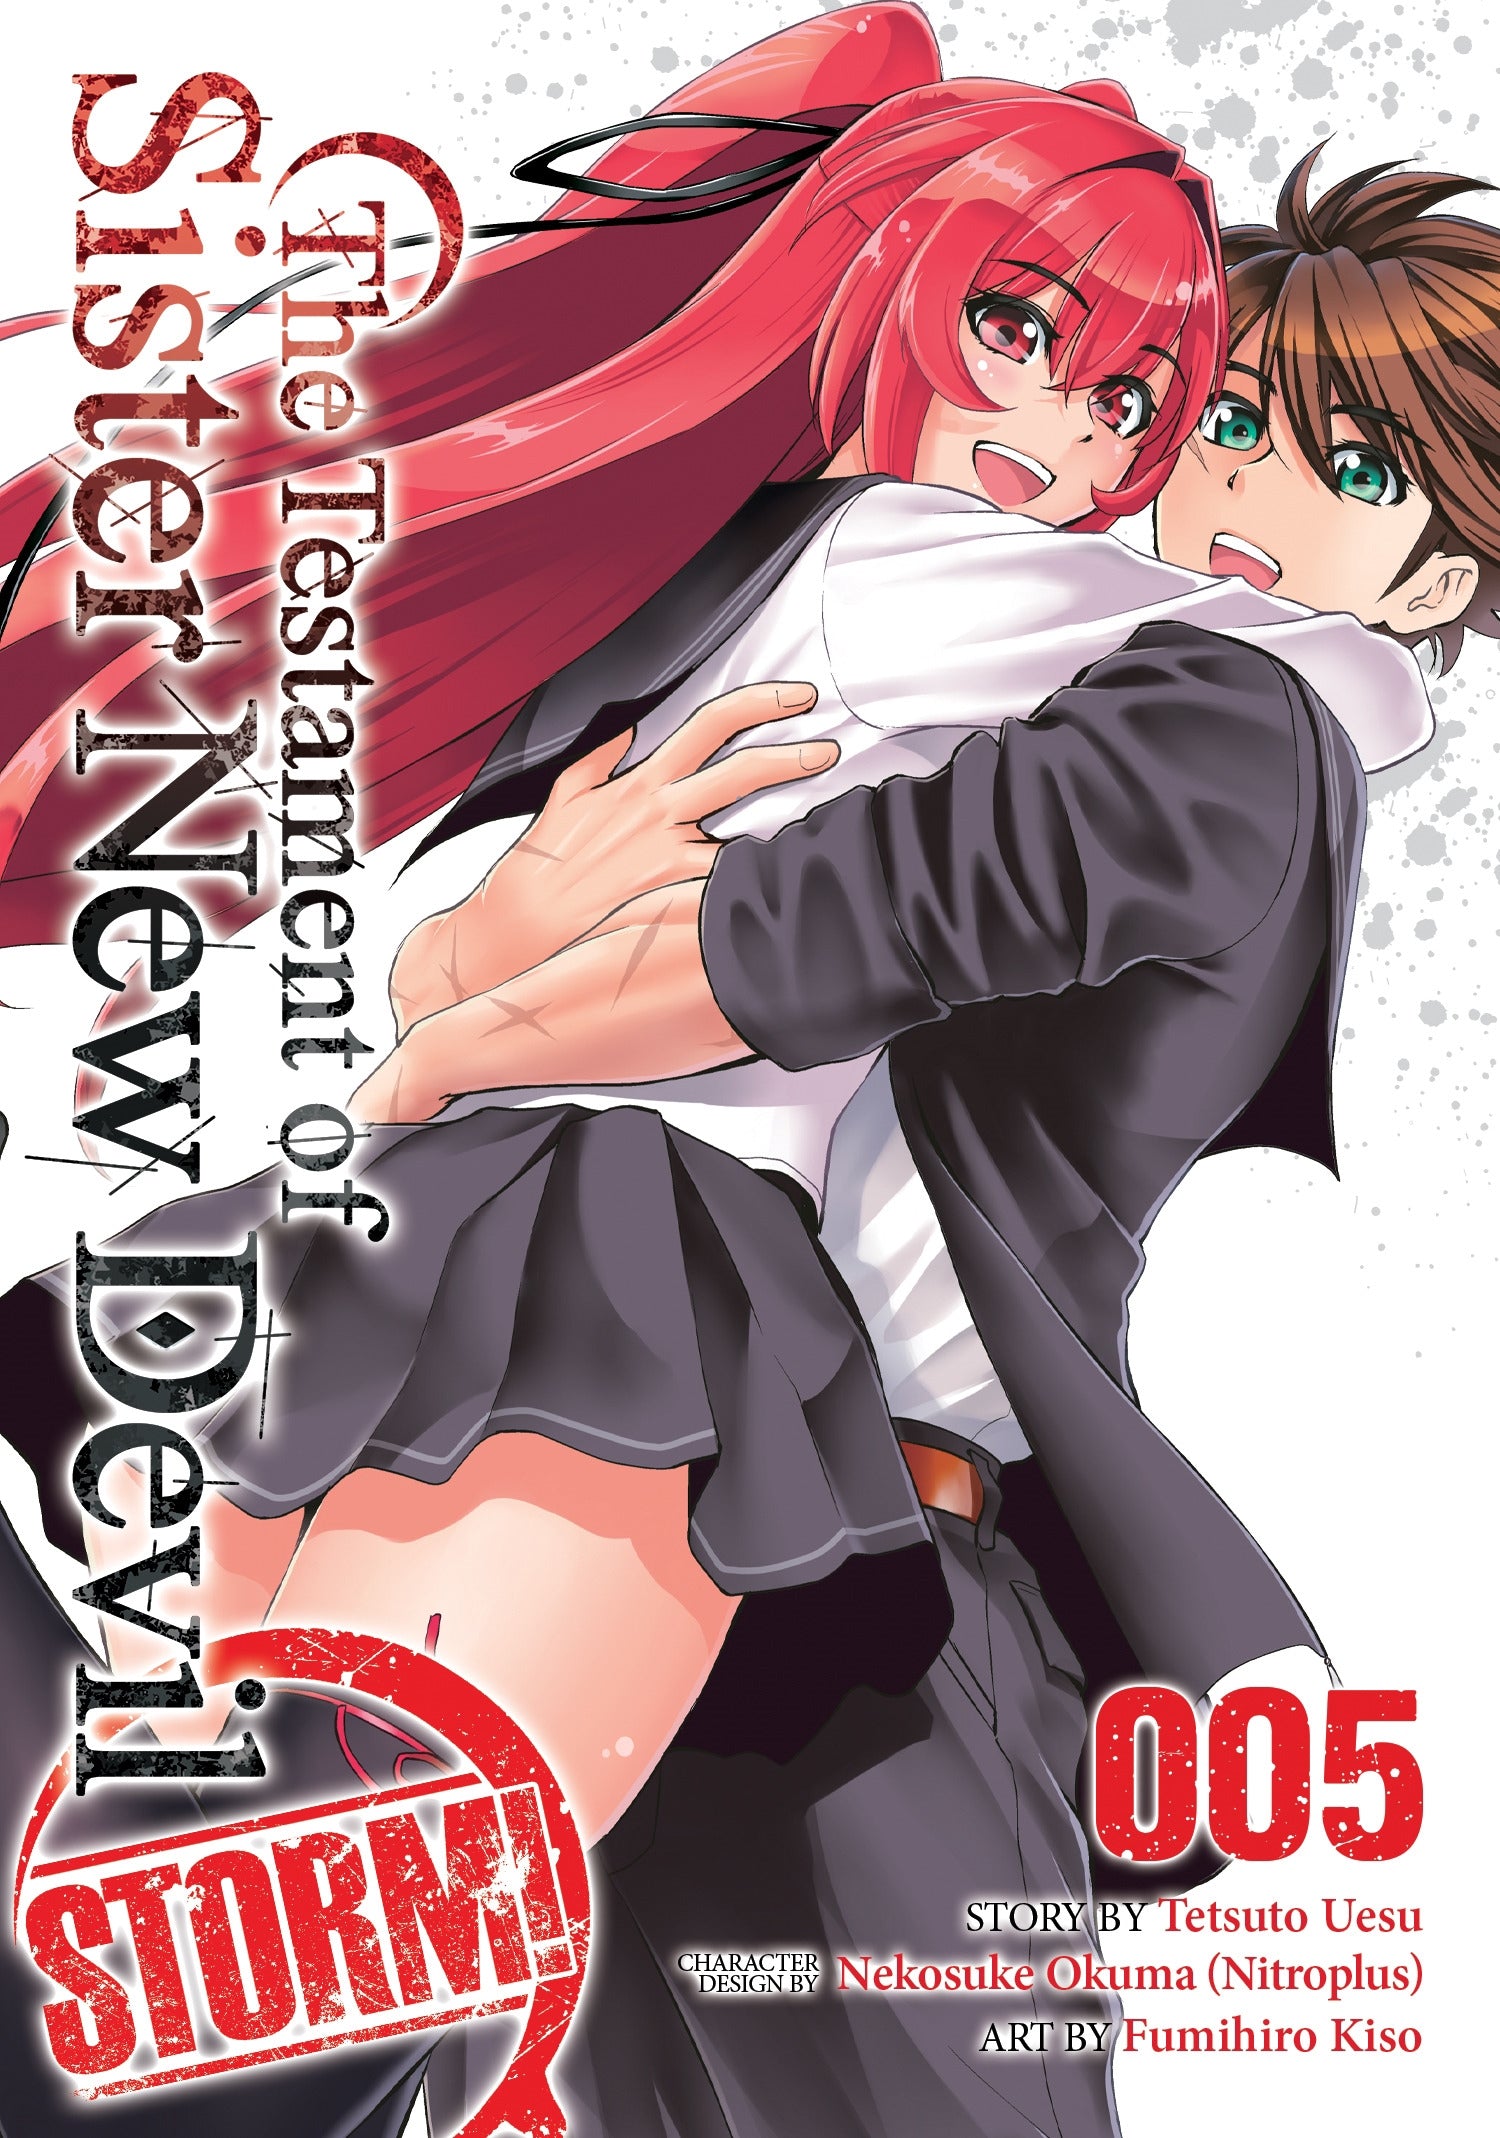 The Testament of Sister New Devil STORM! Vol. 5 - Manga Warehouse